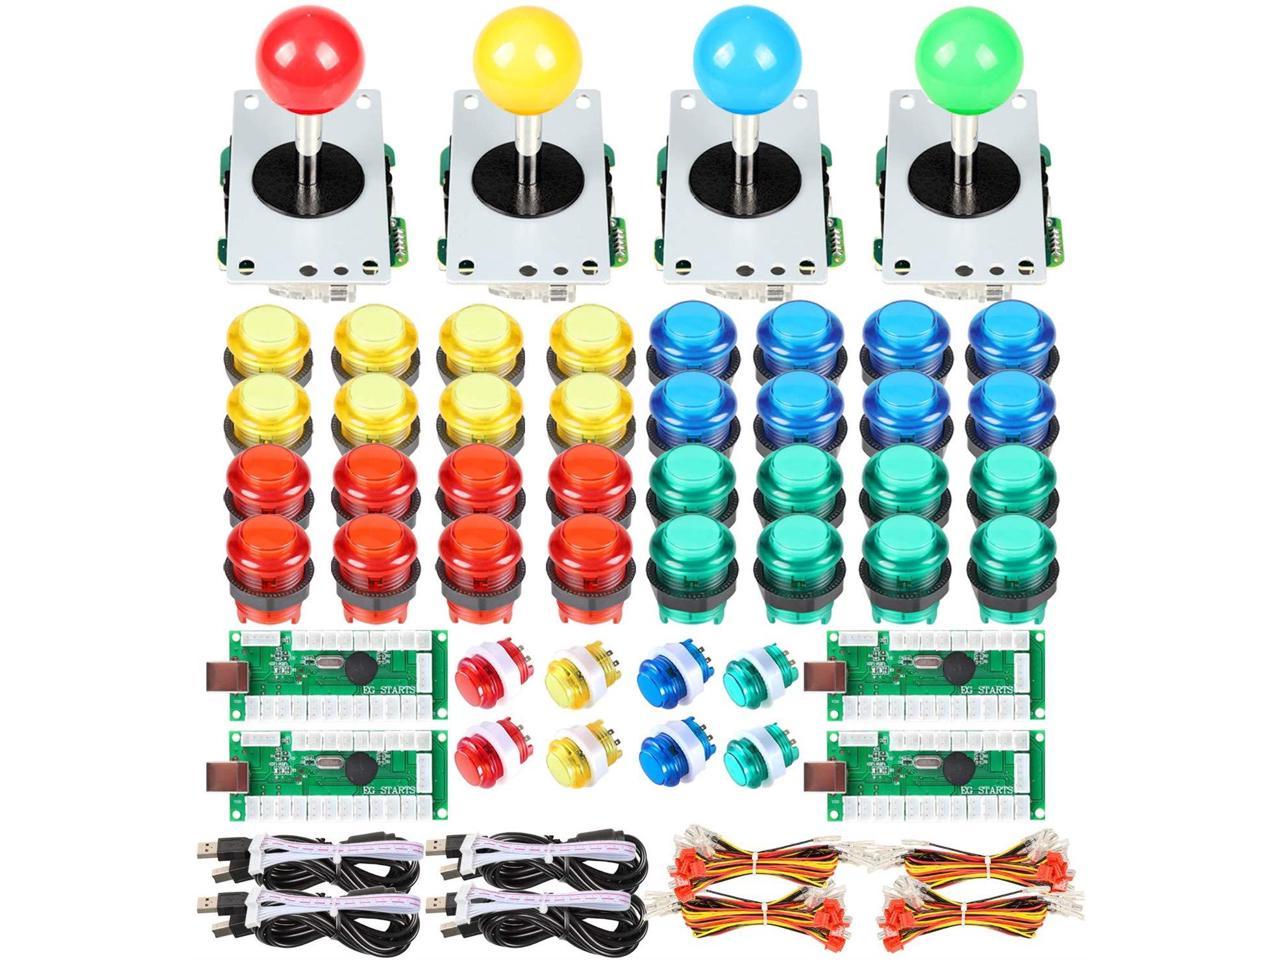 8 Ways 5 Pin Stick EG STARTS Arcade DIY Kit USB Encoder To PC Joystick Chrome Plated LED Illuminated Push Button 1 Player & Coin Buttons For Arcade Mame Raspberry Pi 2 3 3B Games